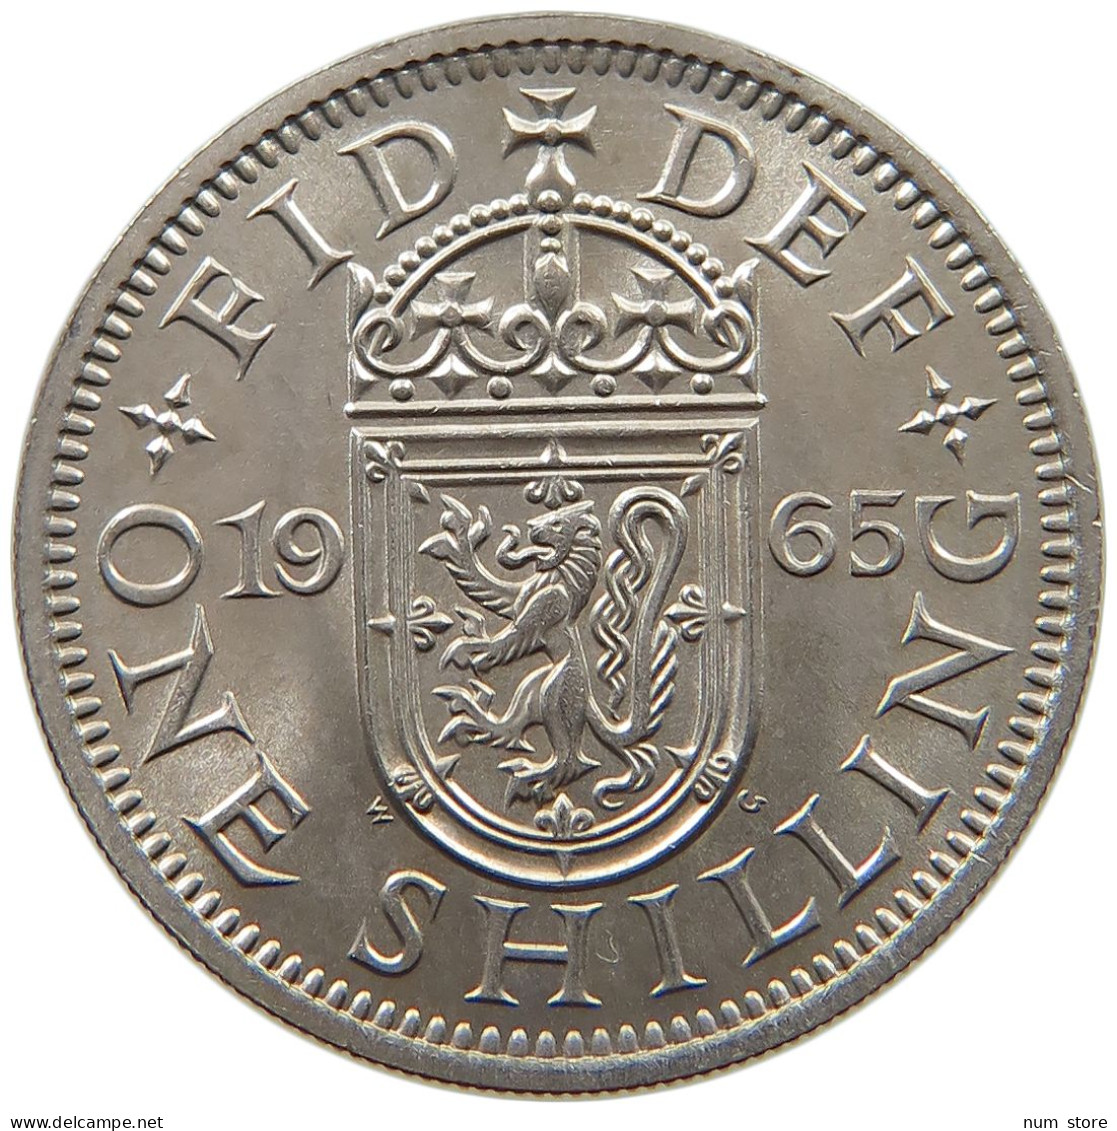 GREAT BRITAIN SHILLING 1965 Elisabeth II. (1952-) #s064 0519 - I. 1 Shilling